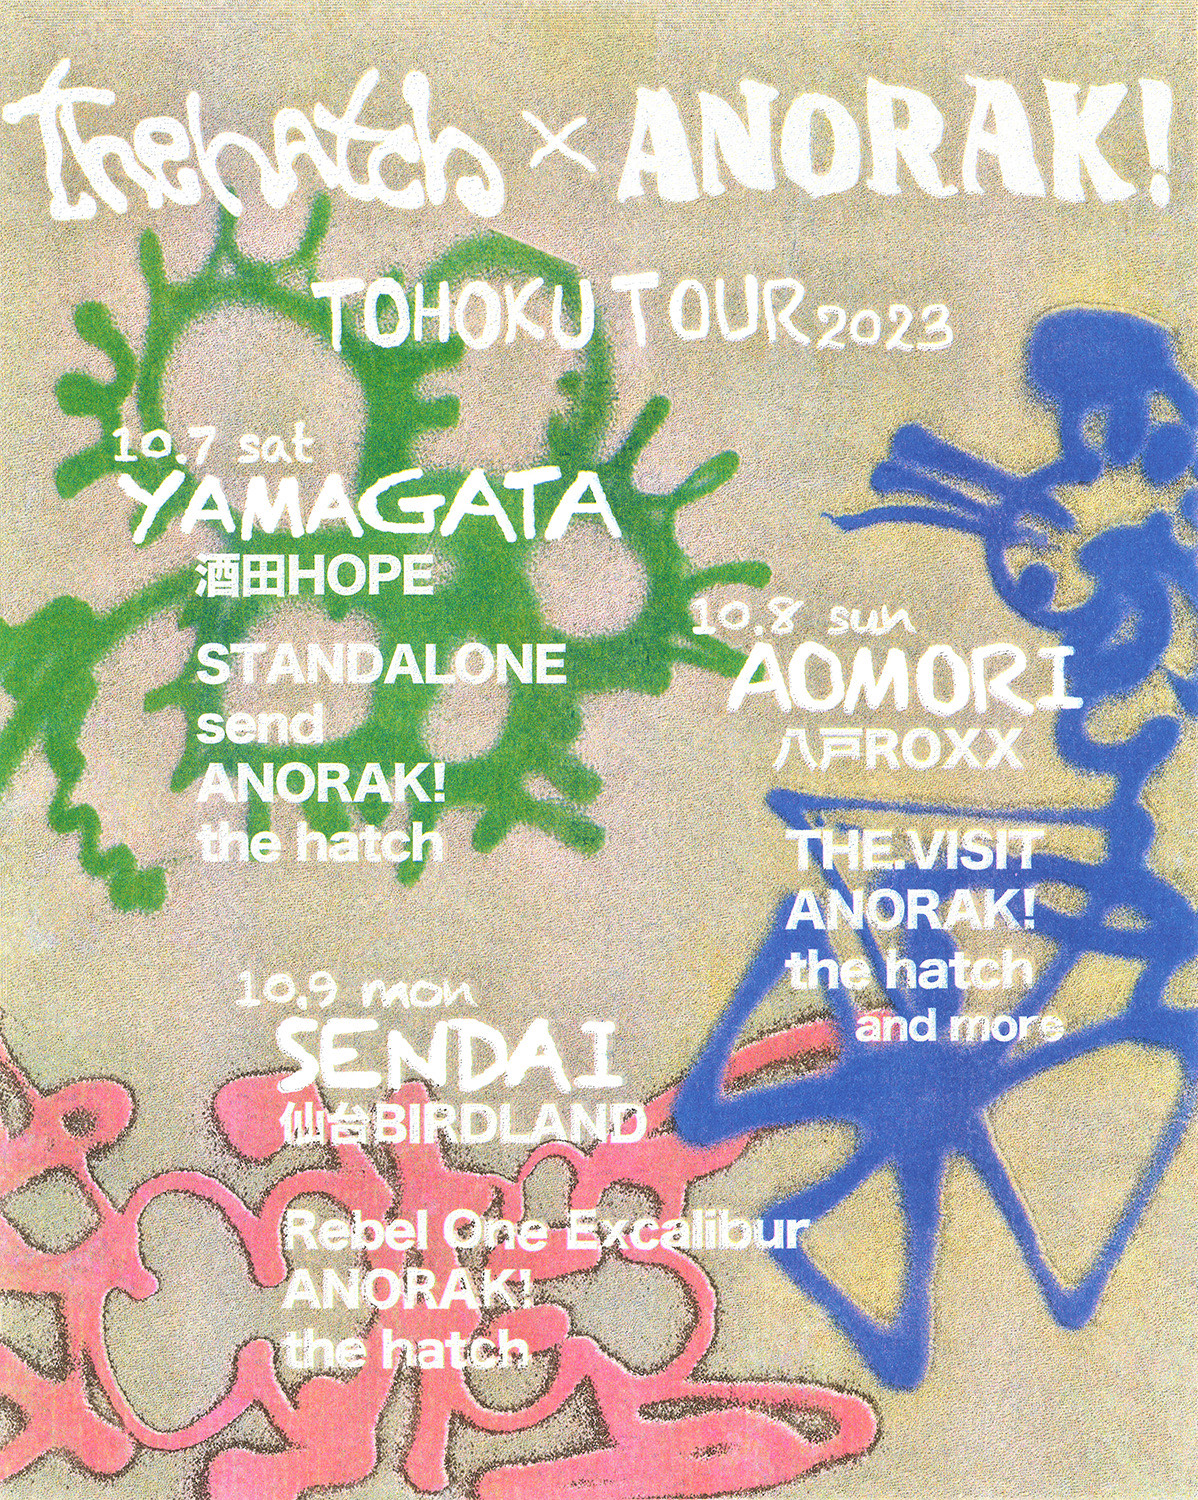 ANORAK!~the hatch TOHOKU TOUR 2023